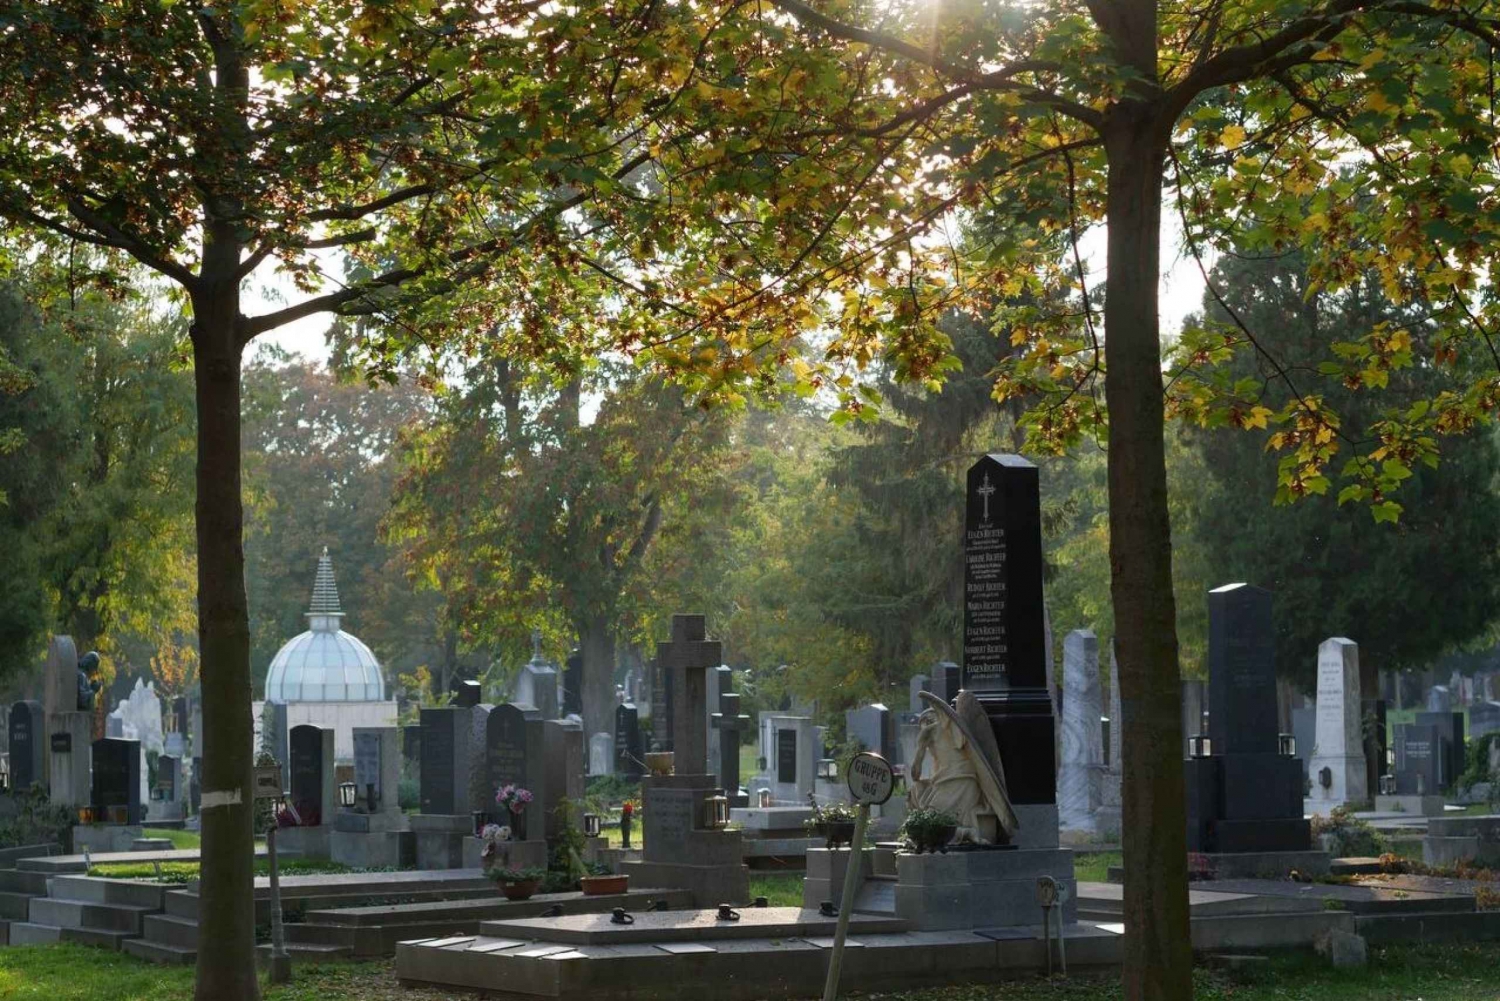 Wien: Geführter Spaziergang am Zentralfriedhof